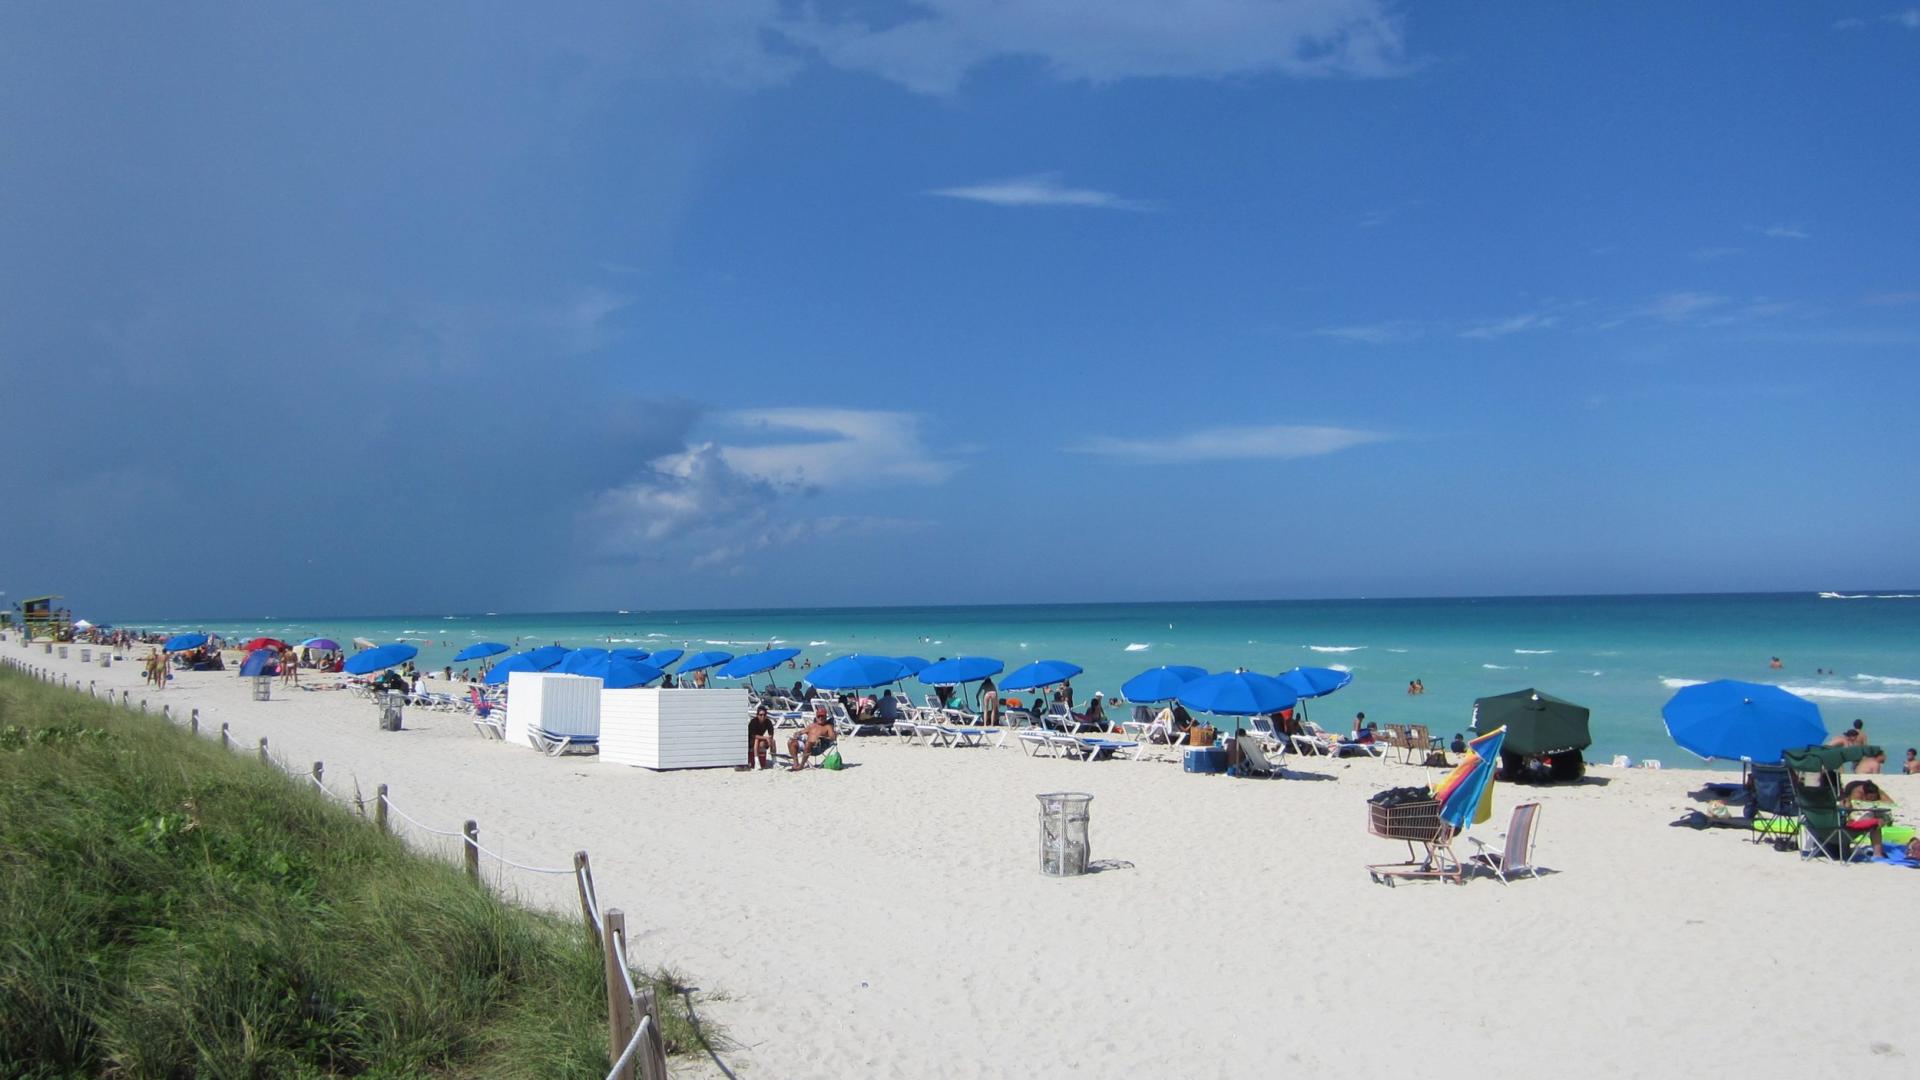 South Beach Miami Florida HD Wallpaper of Beach   hdwallpaper2013com